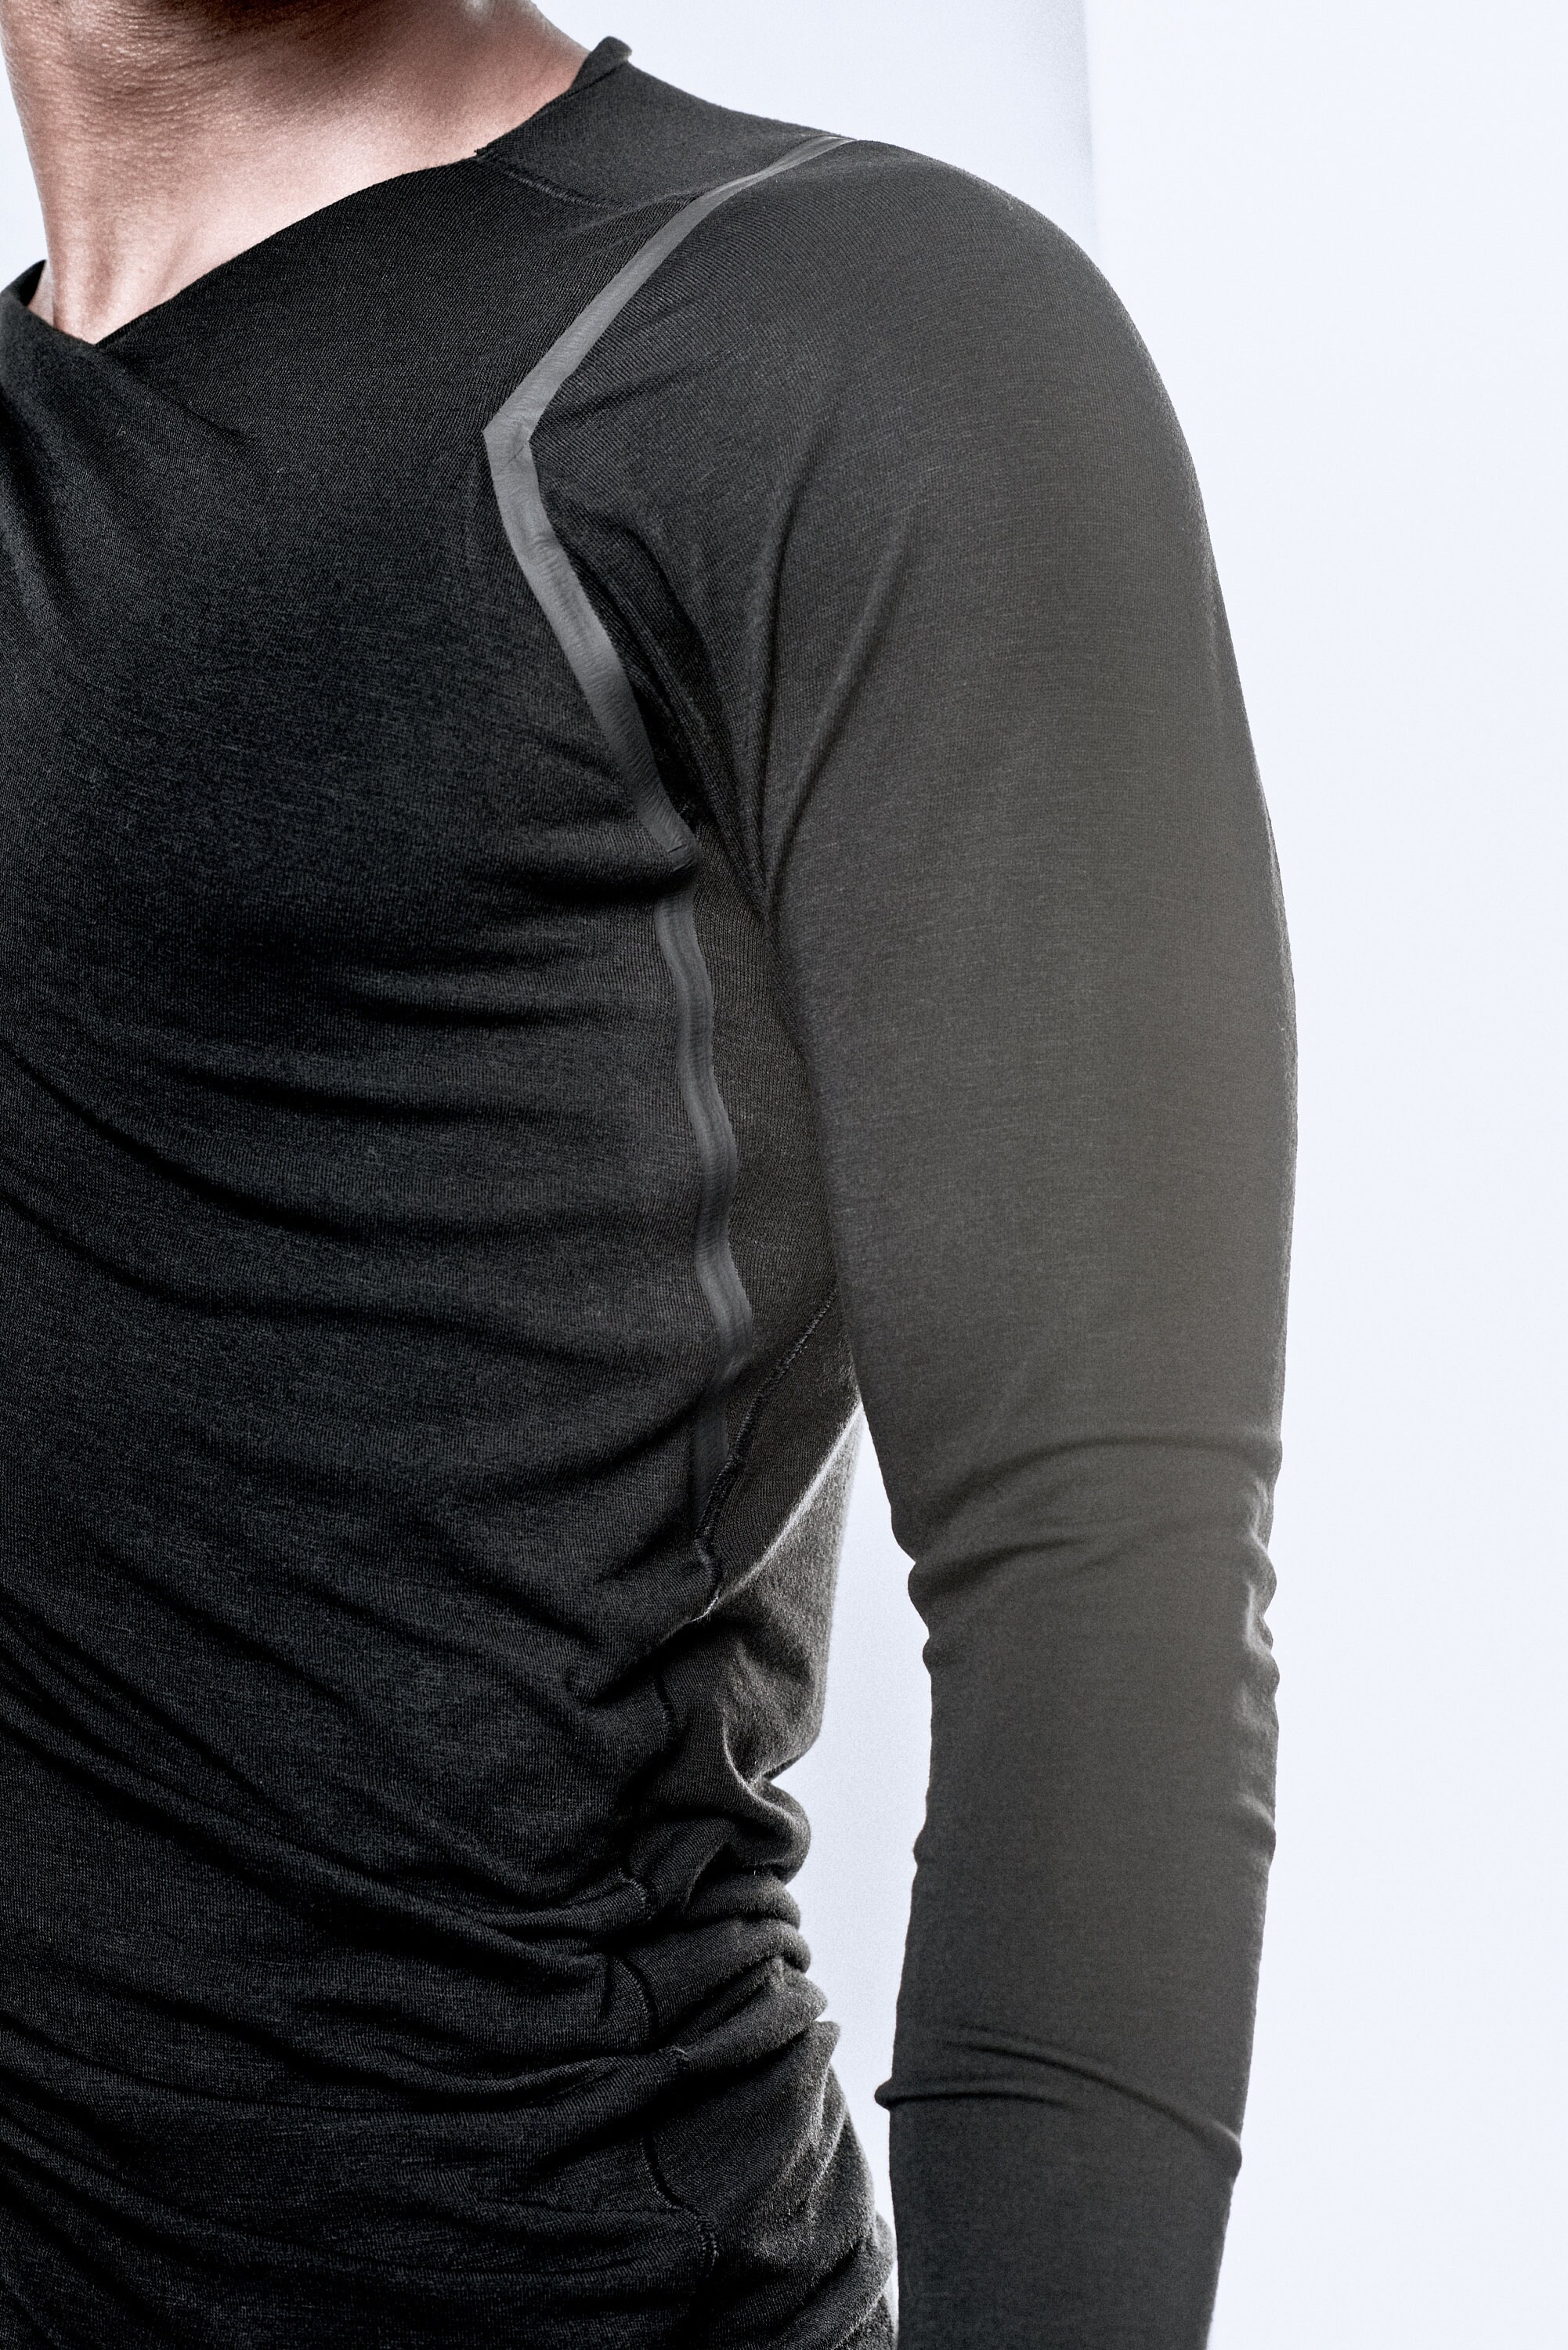 Black Twisted Top / Urban Bonded Shirt /Modern Shirt / Mens | Etsy